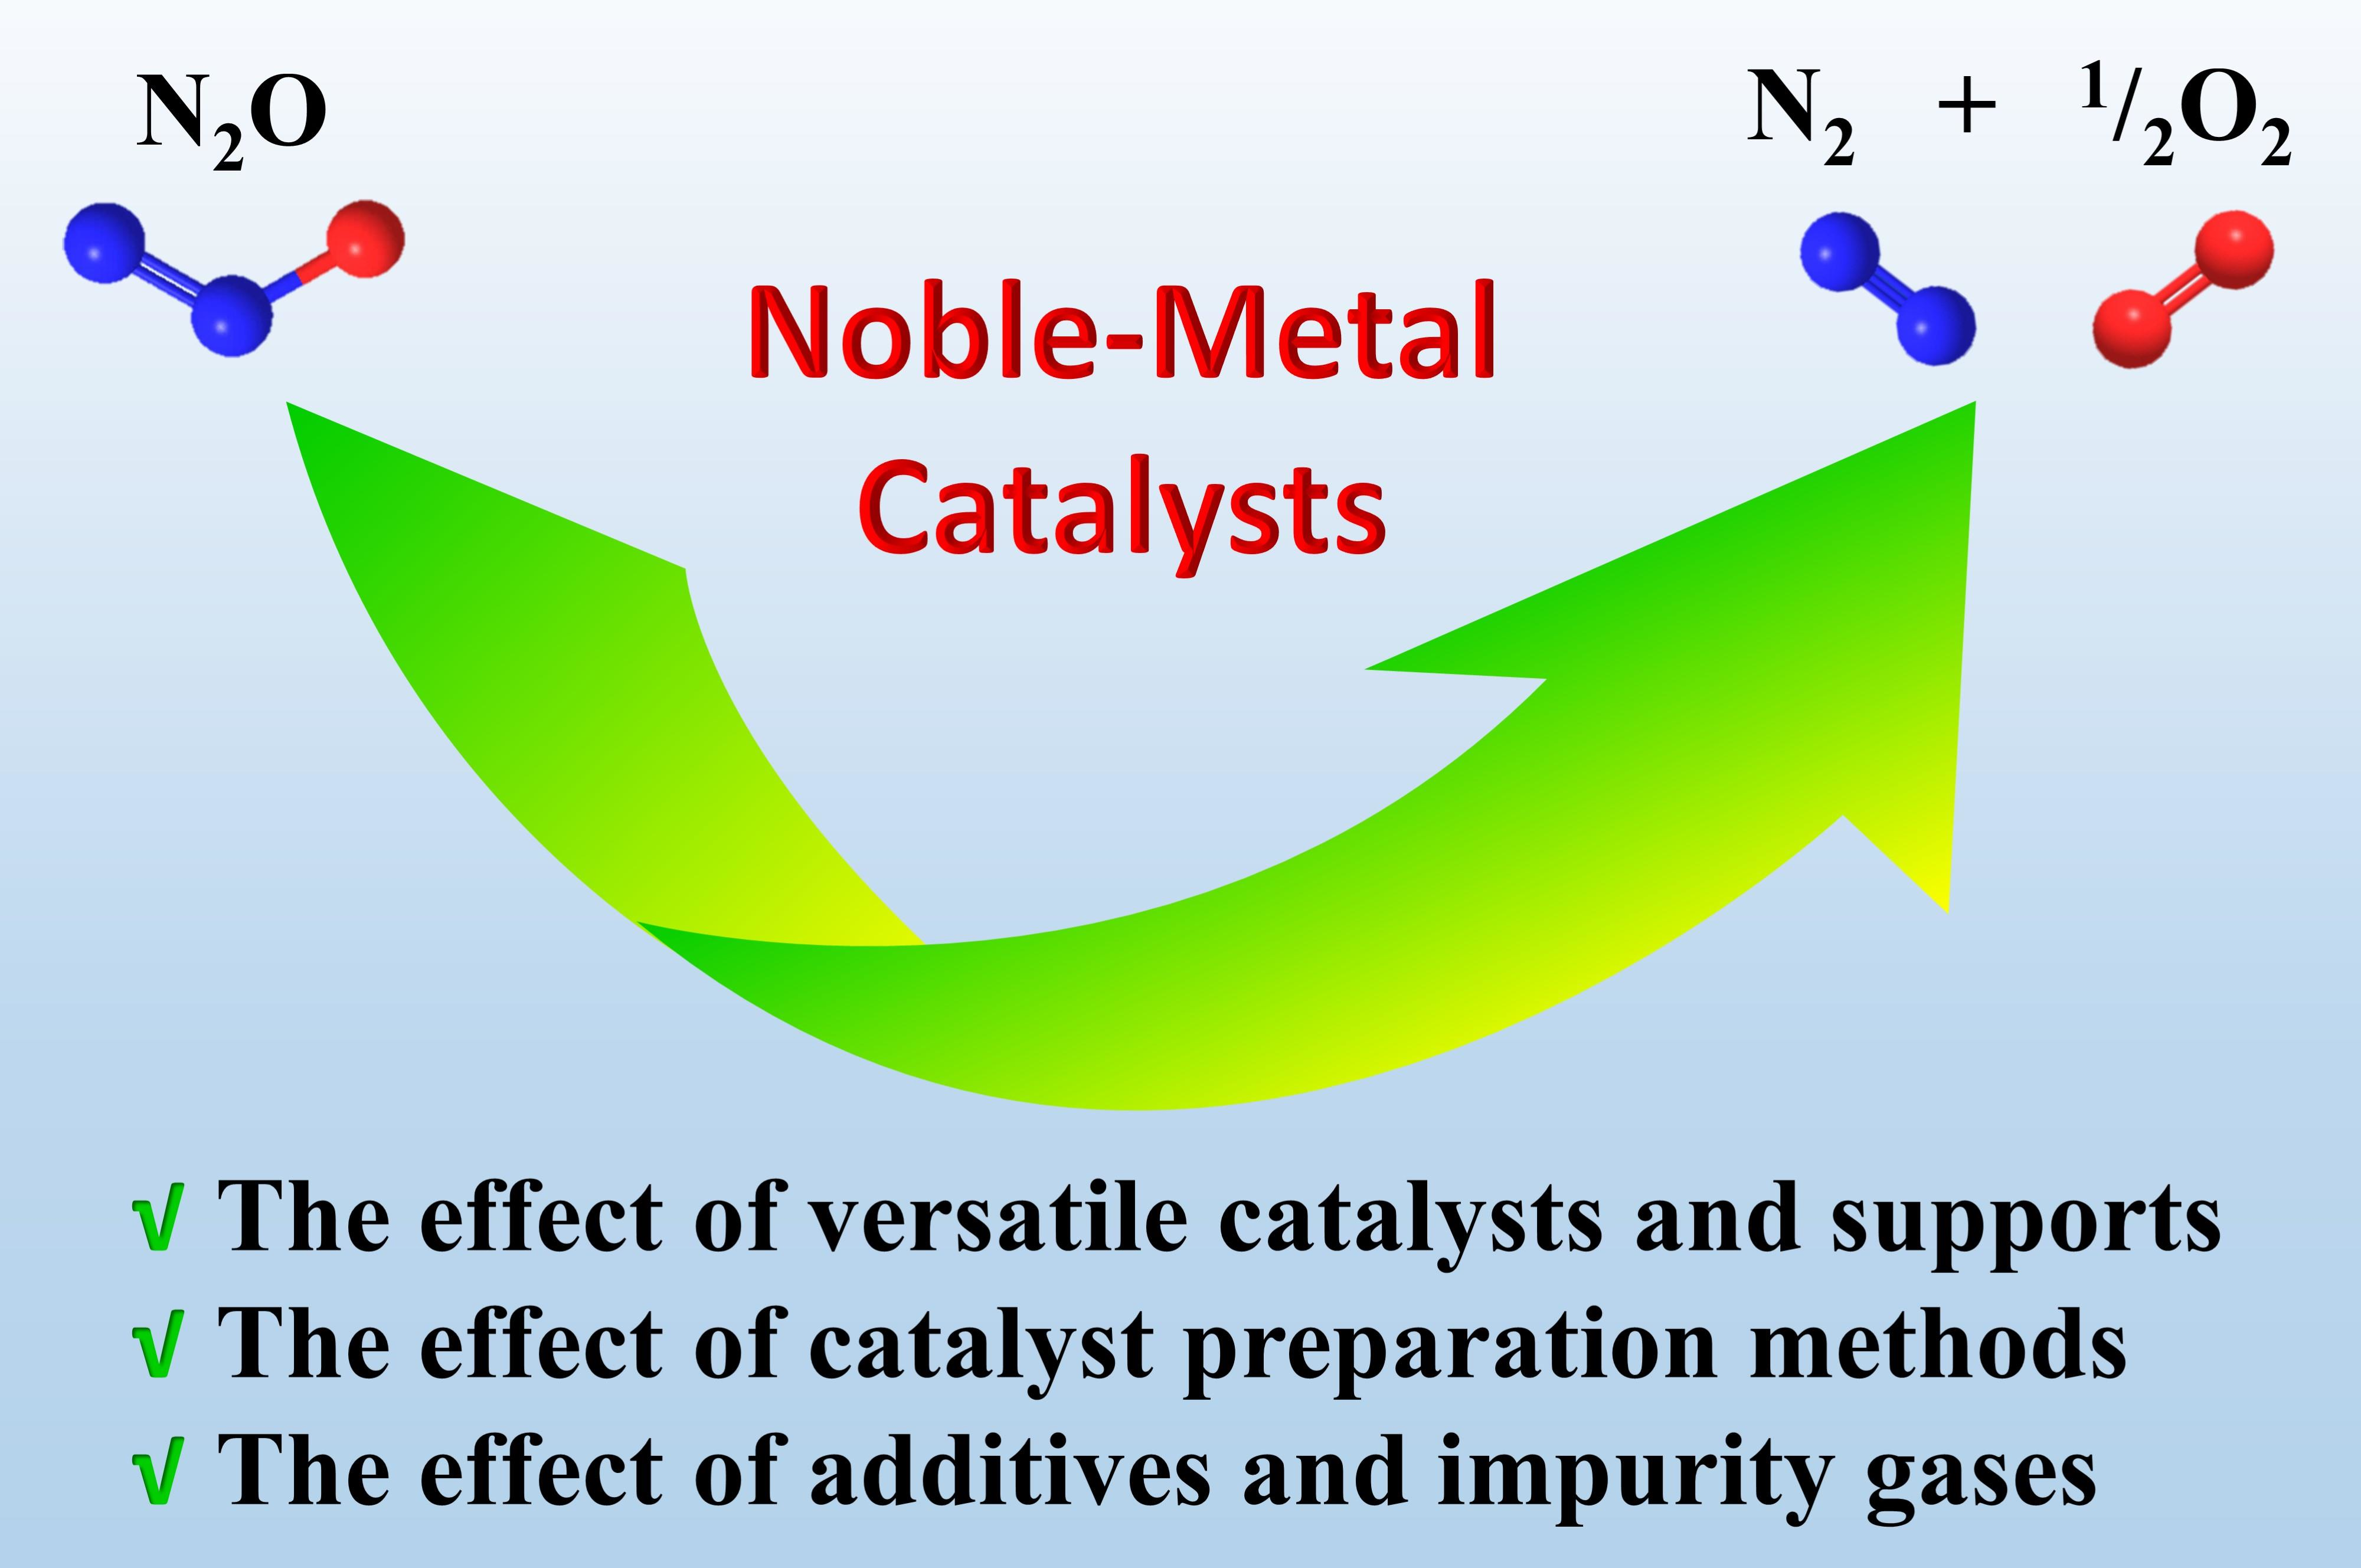 Effect of catalysts